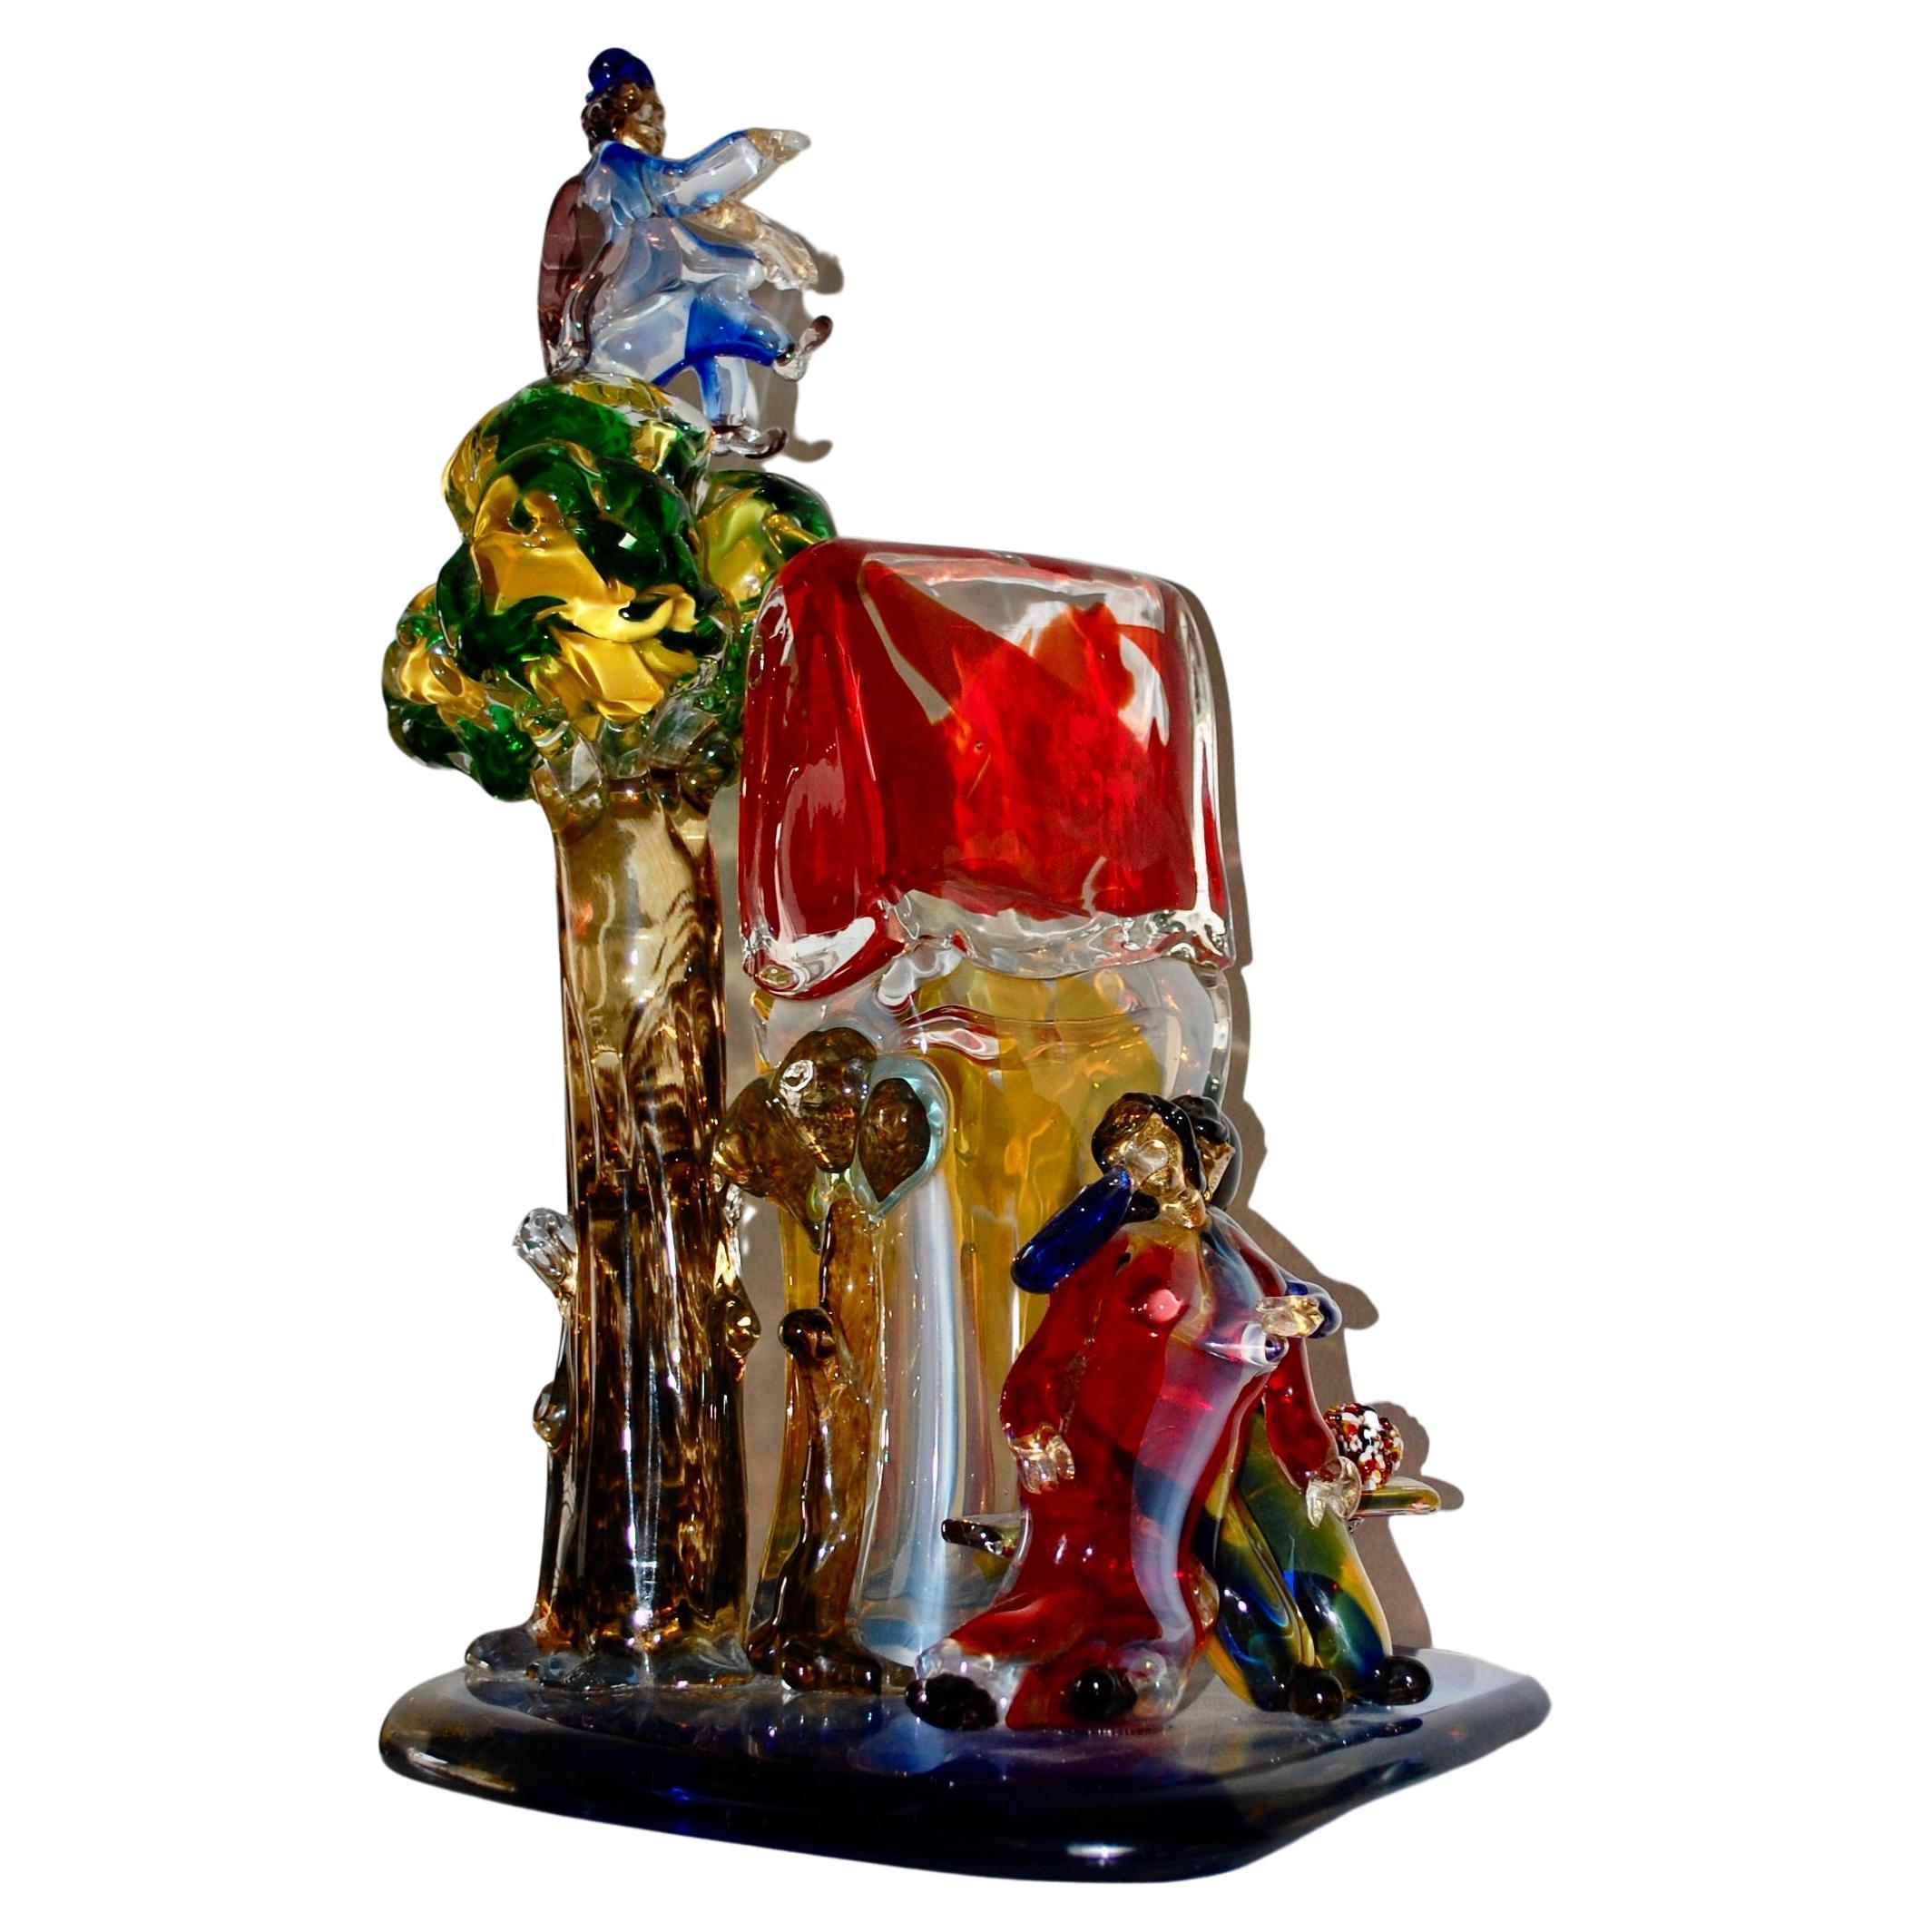 Walter Furlan Figurative Sculpture - Lovers Tribute to Chagall Murano Glass Sculpture